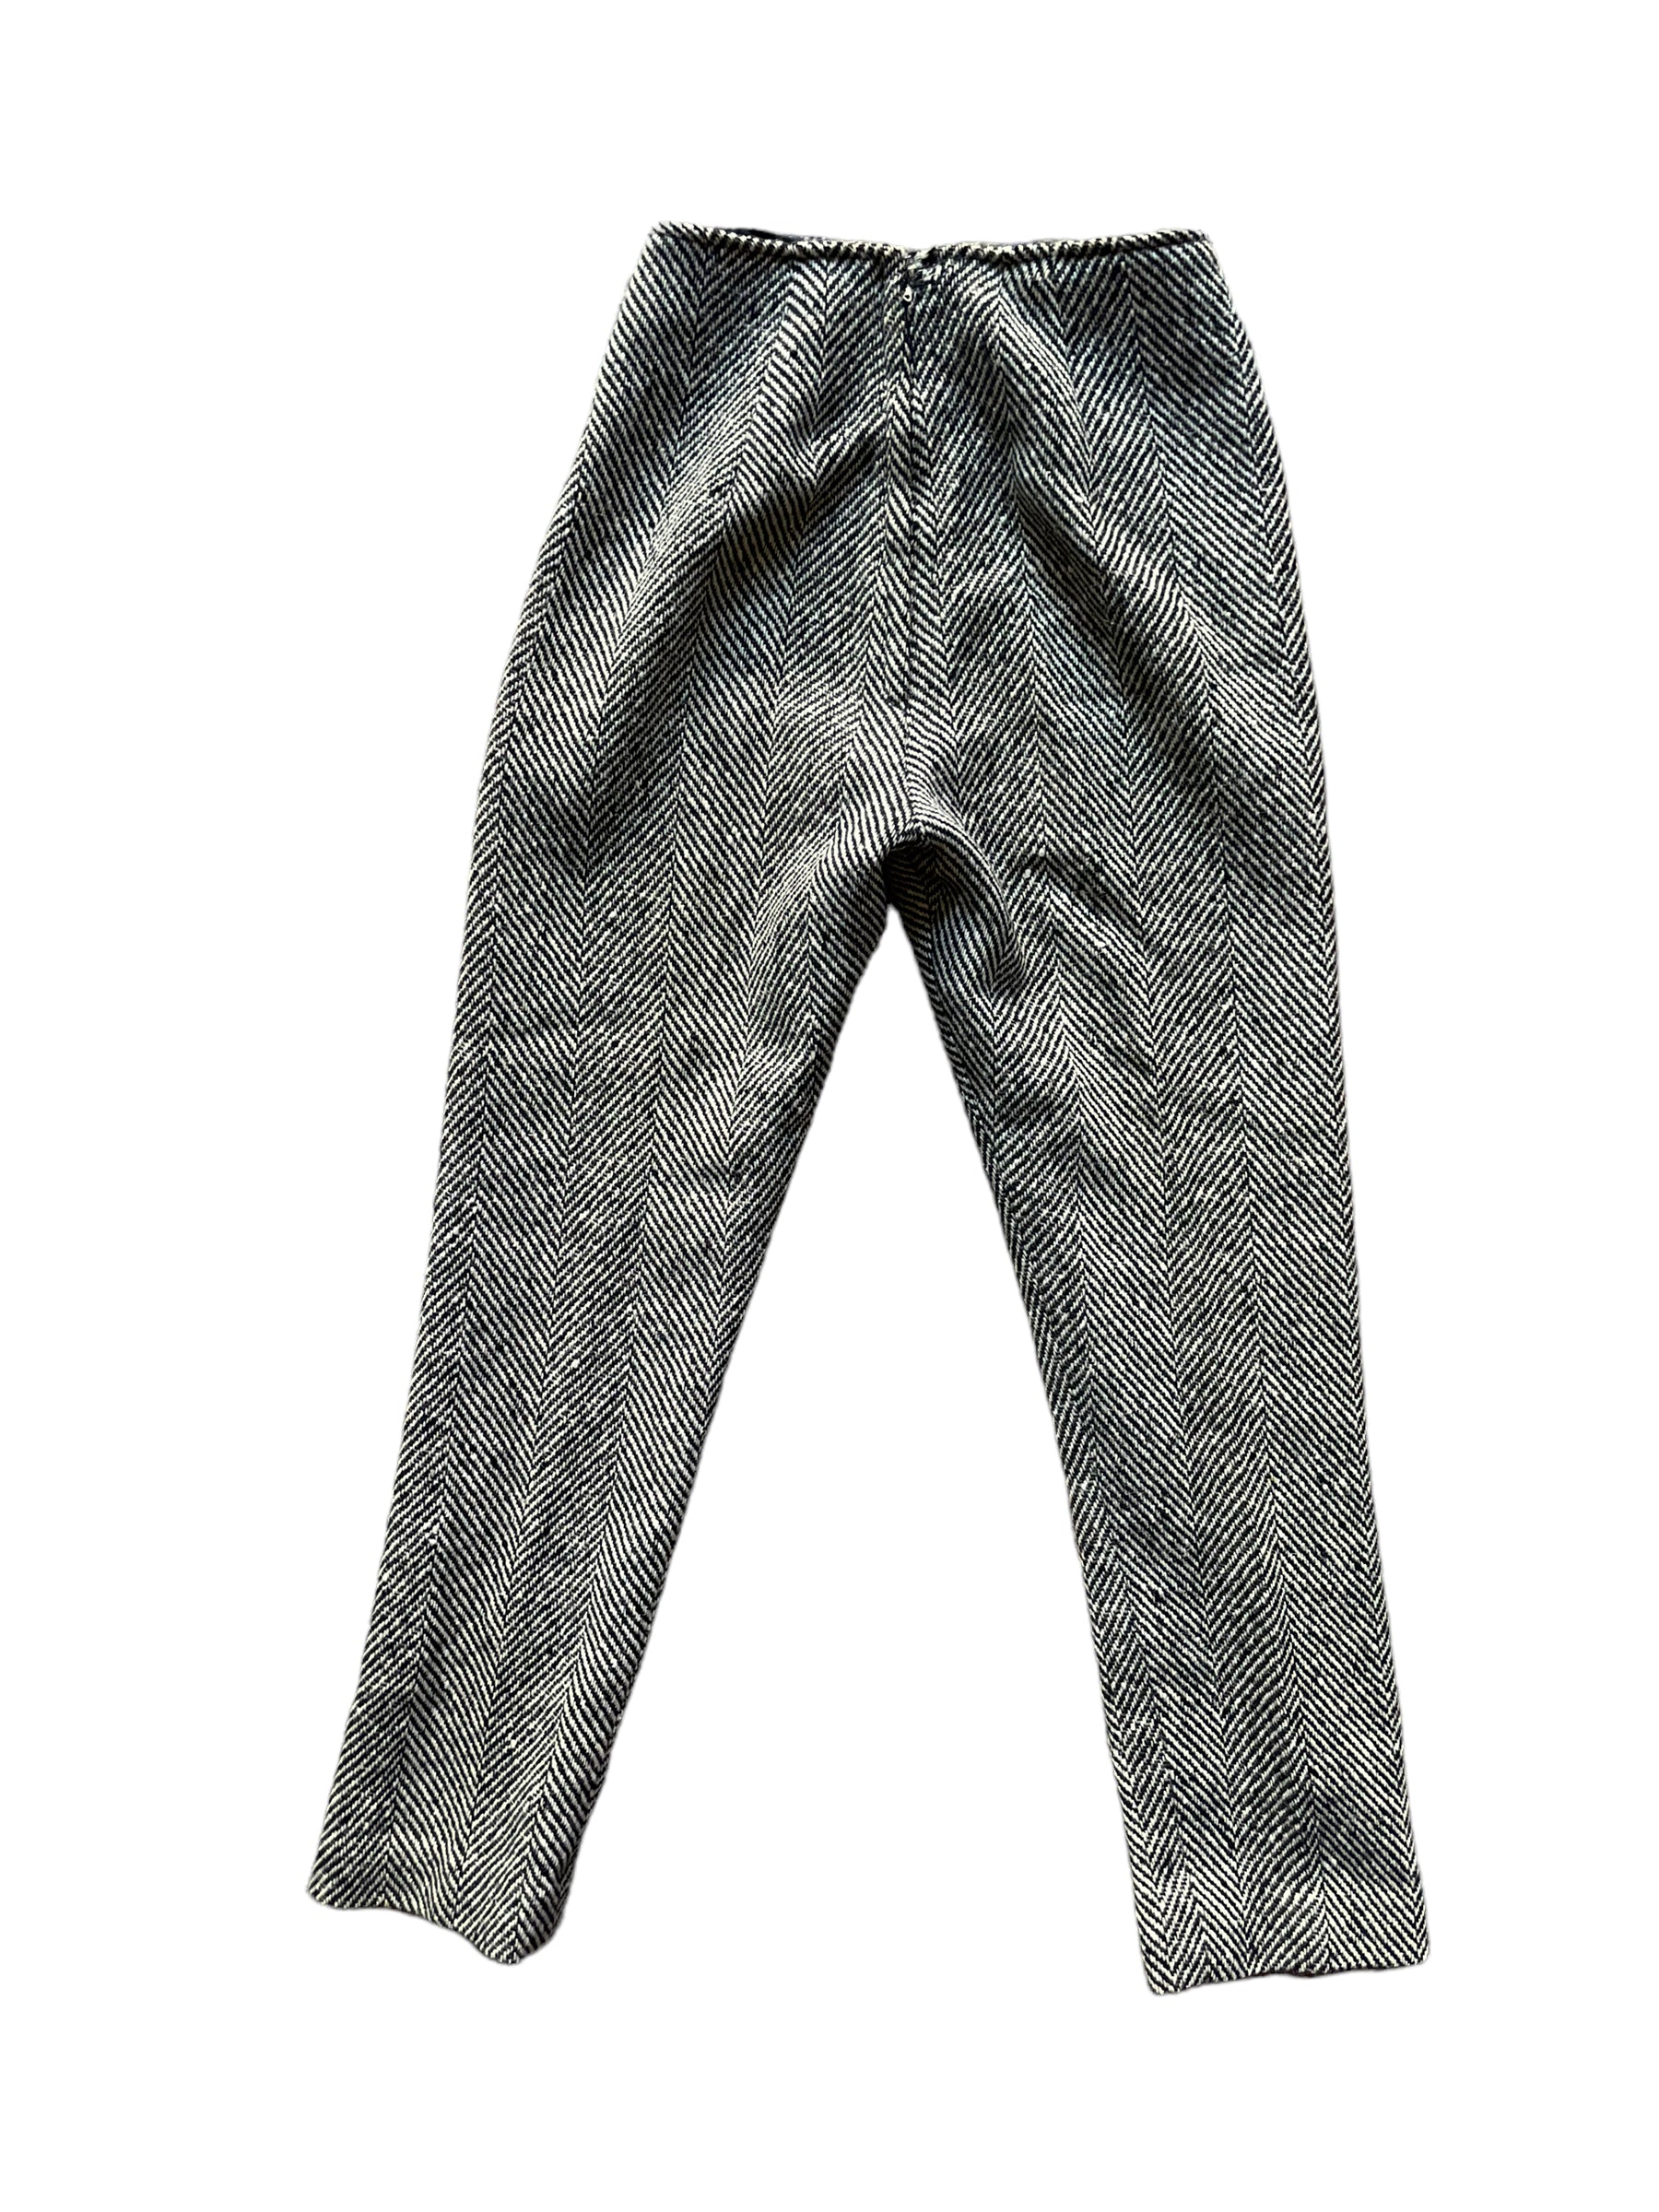 1950s Pants Pattern - Etsy